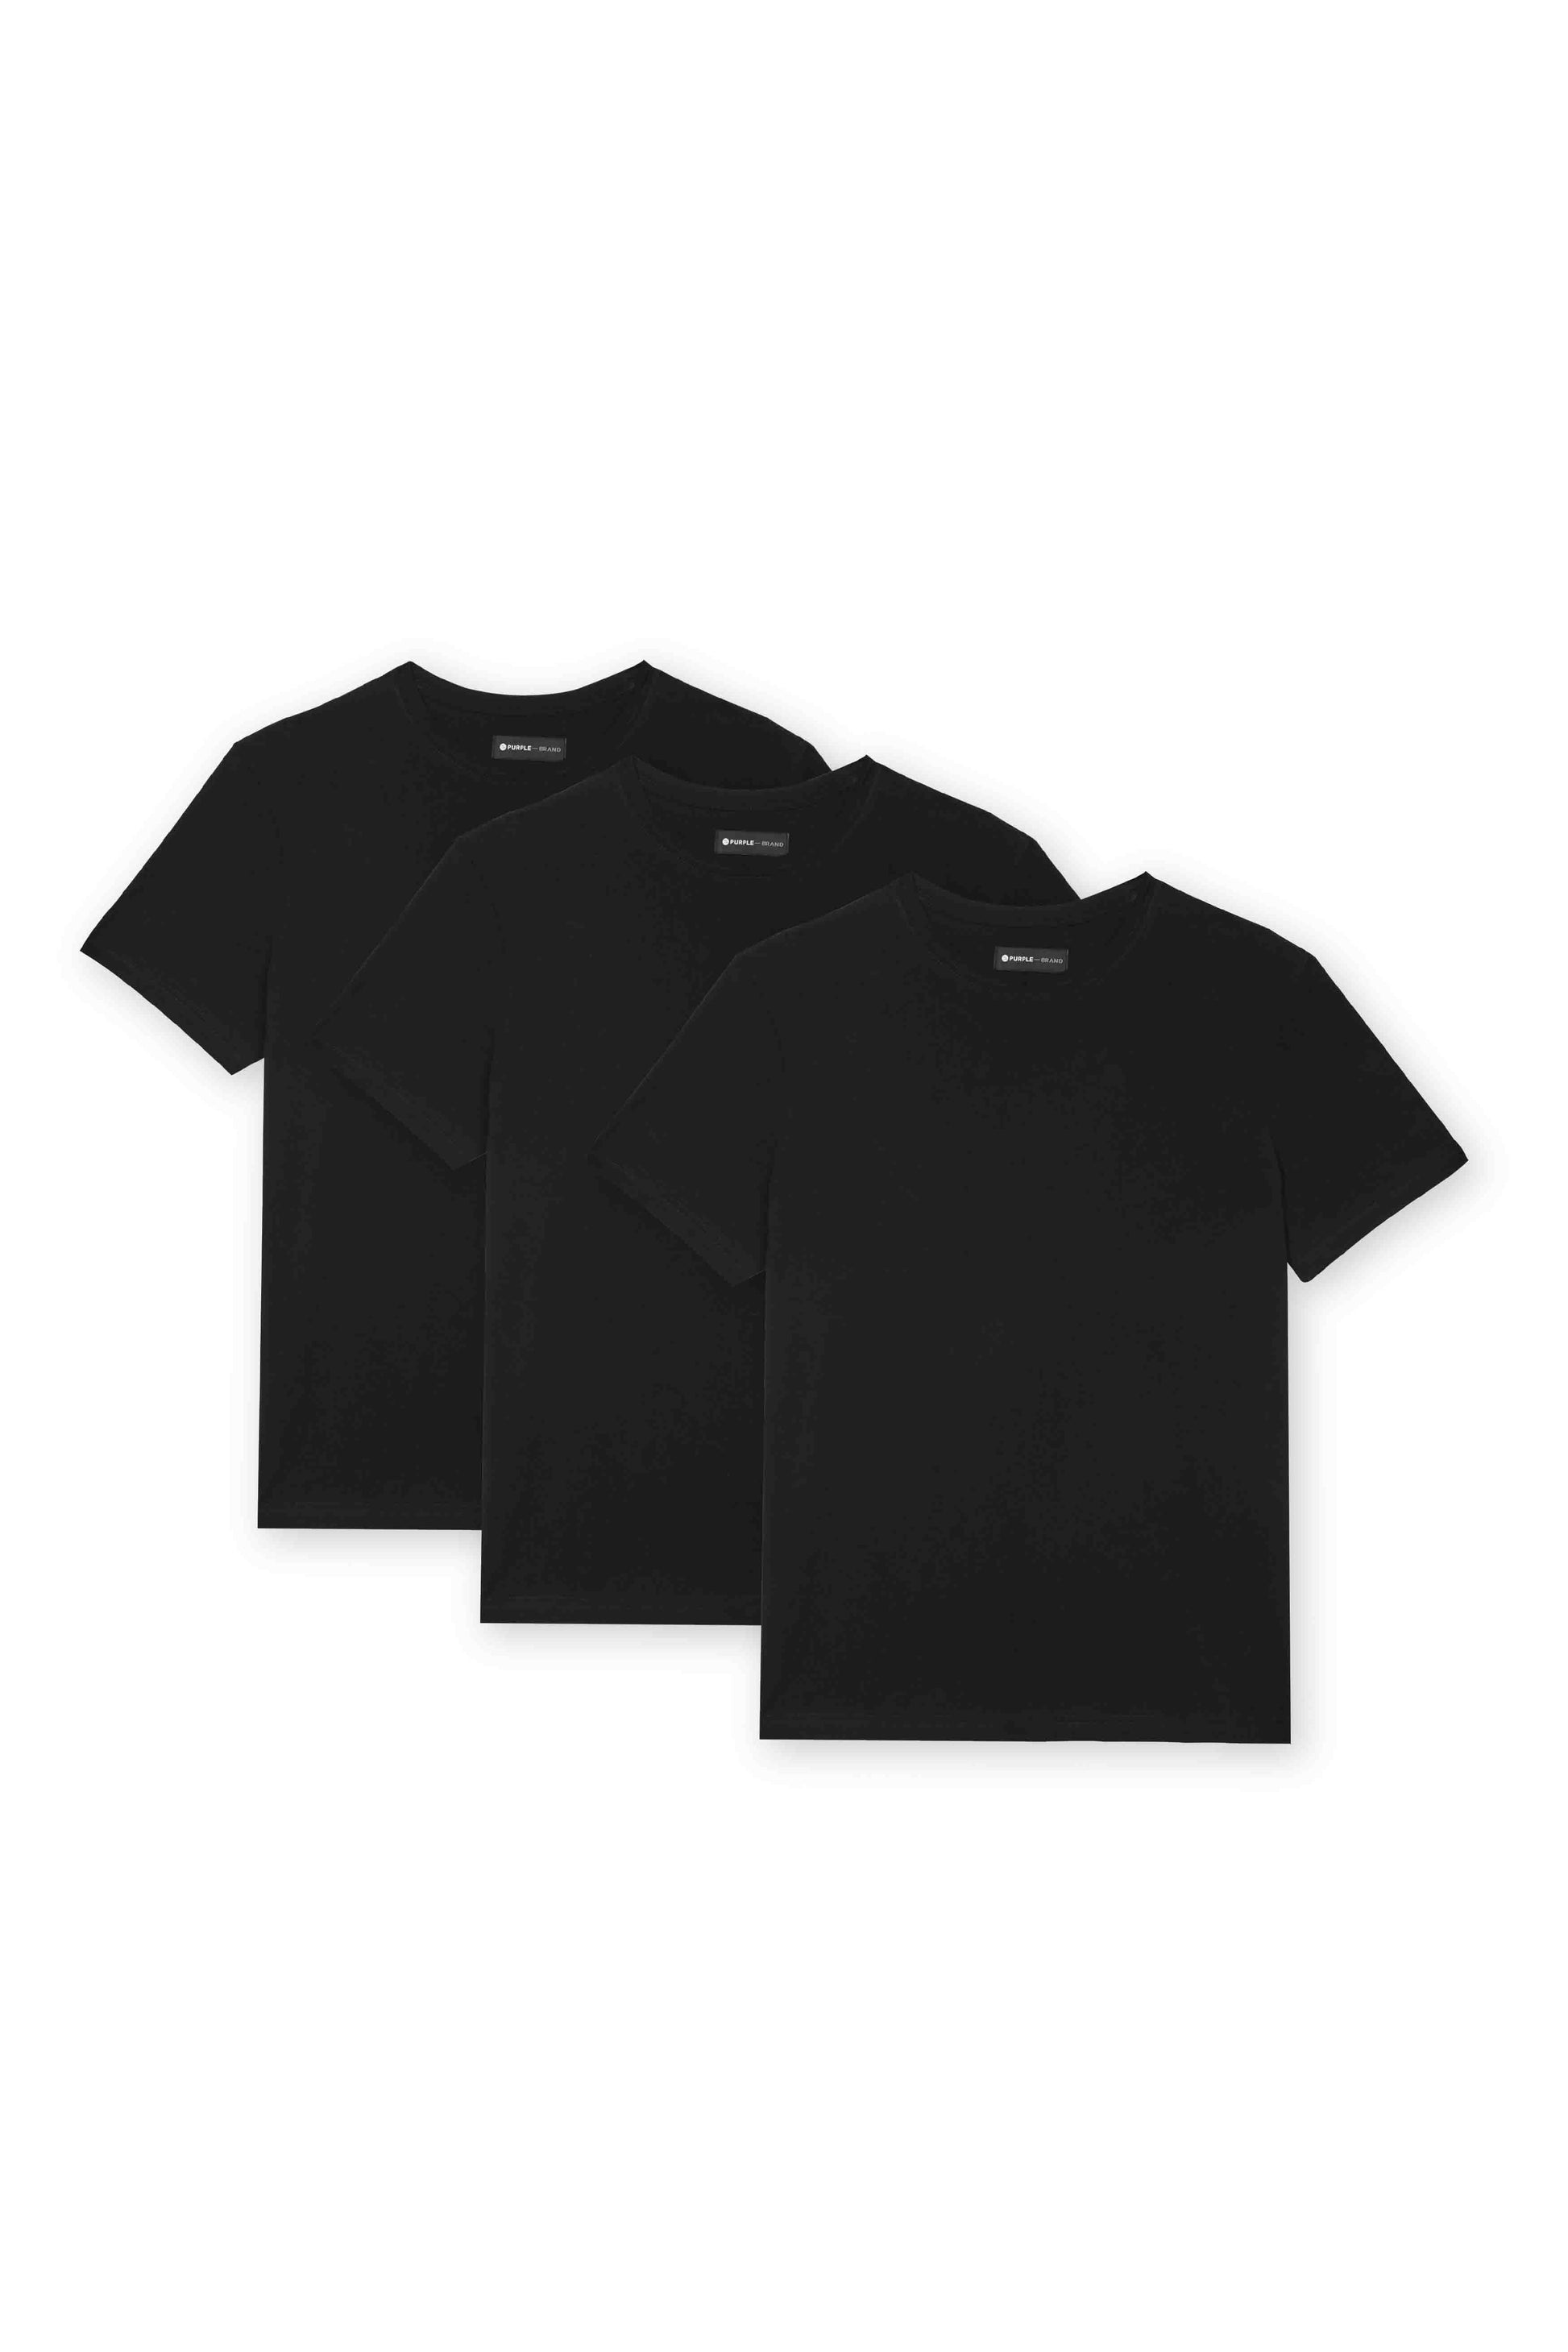 vixx leo zelos Essential T-Shirt for Sale by yeongwonhikpop